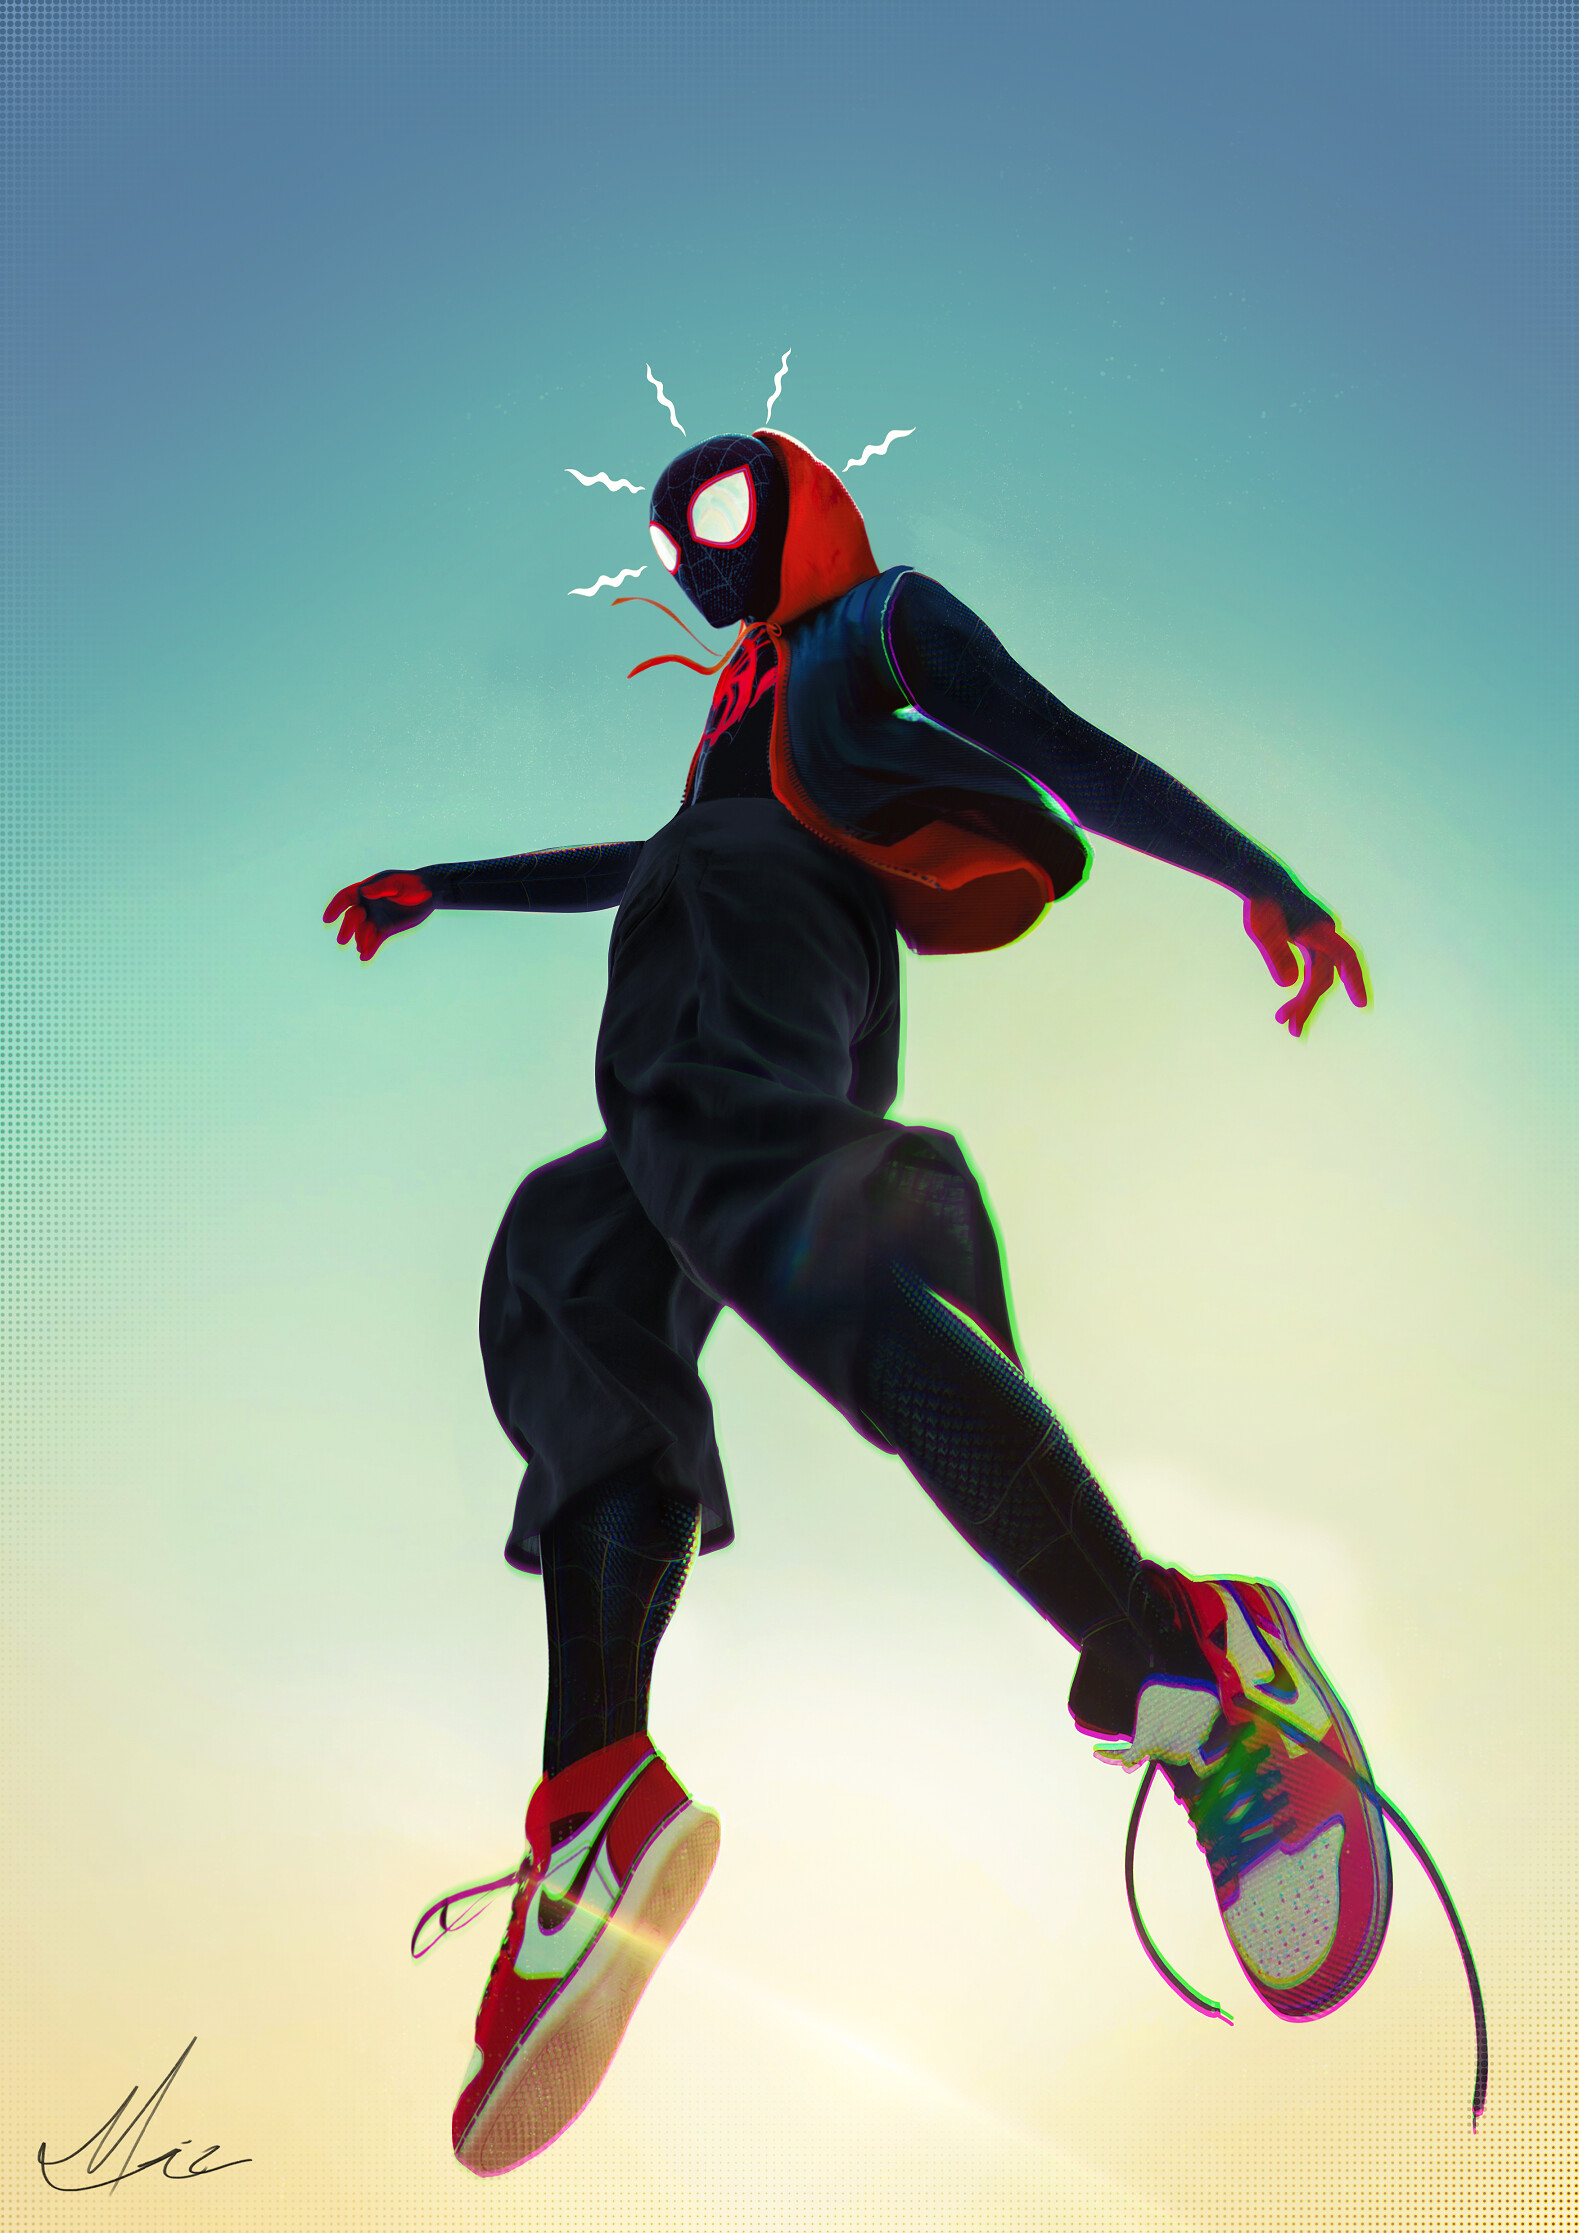 General 1579x2233 Mizuri AU Miles Morales Marvel Comics Marvel Super Heroes suits jacket sneakers digital art illustration Spider-Man: Into the Spider-Verse portrait display